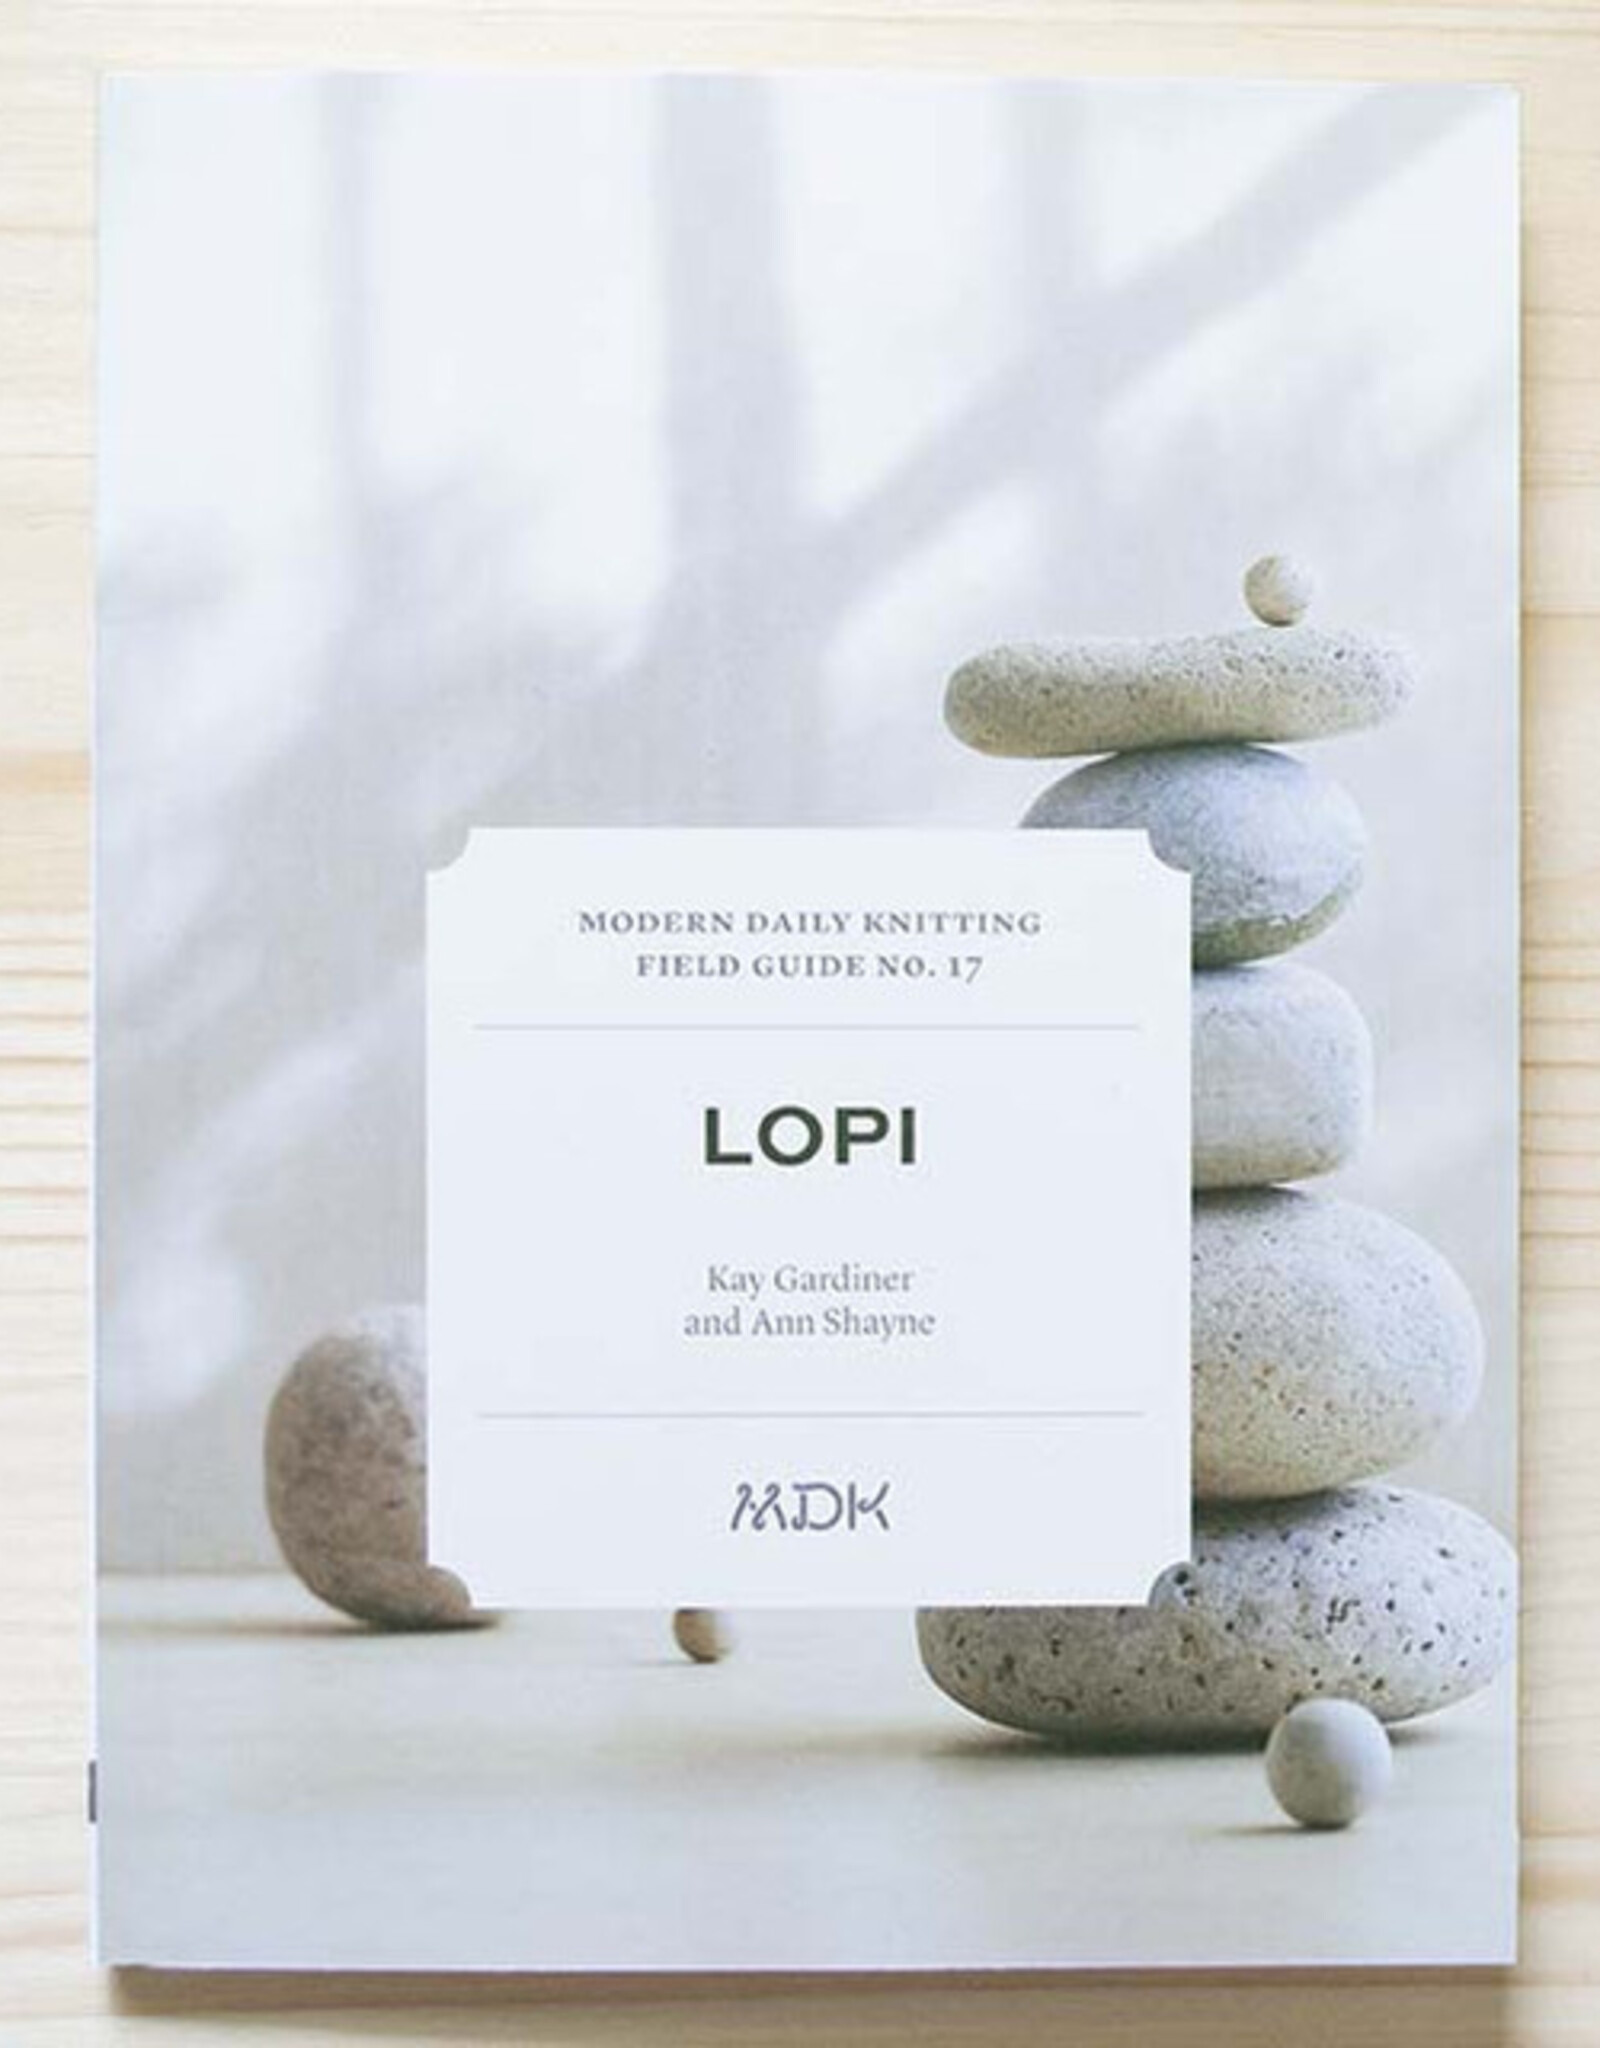 Lopi - MDK Field Guide #17